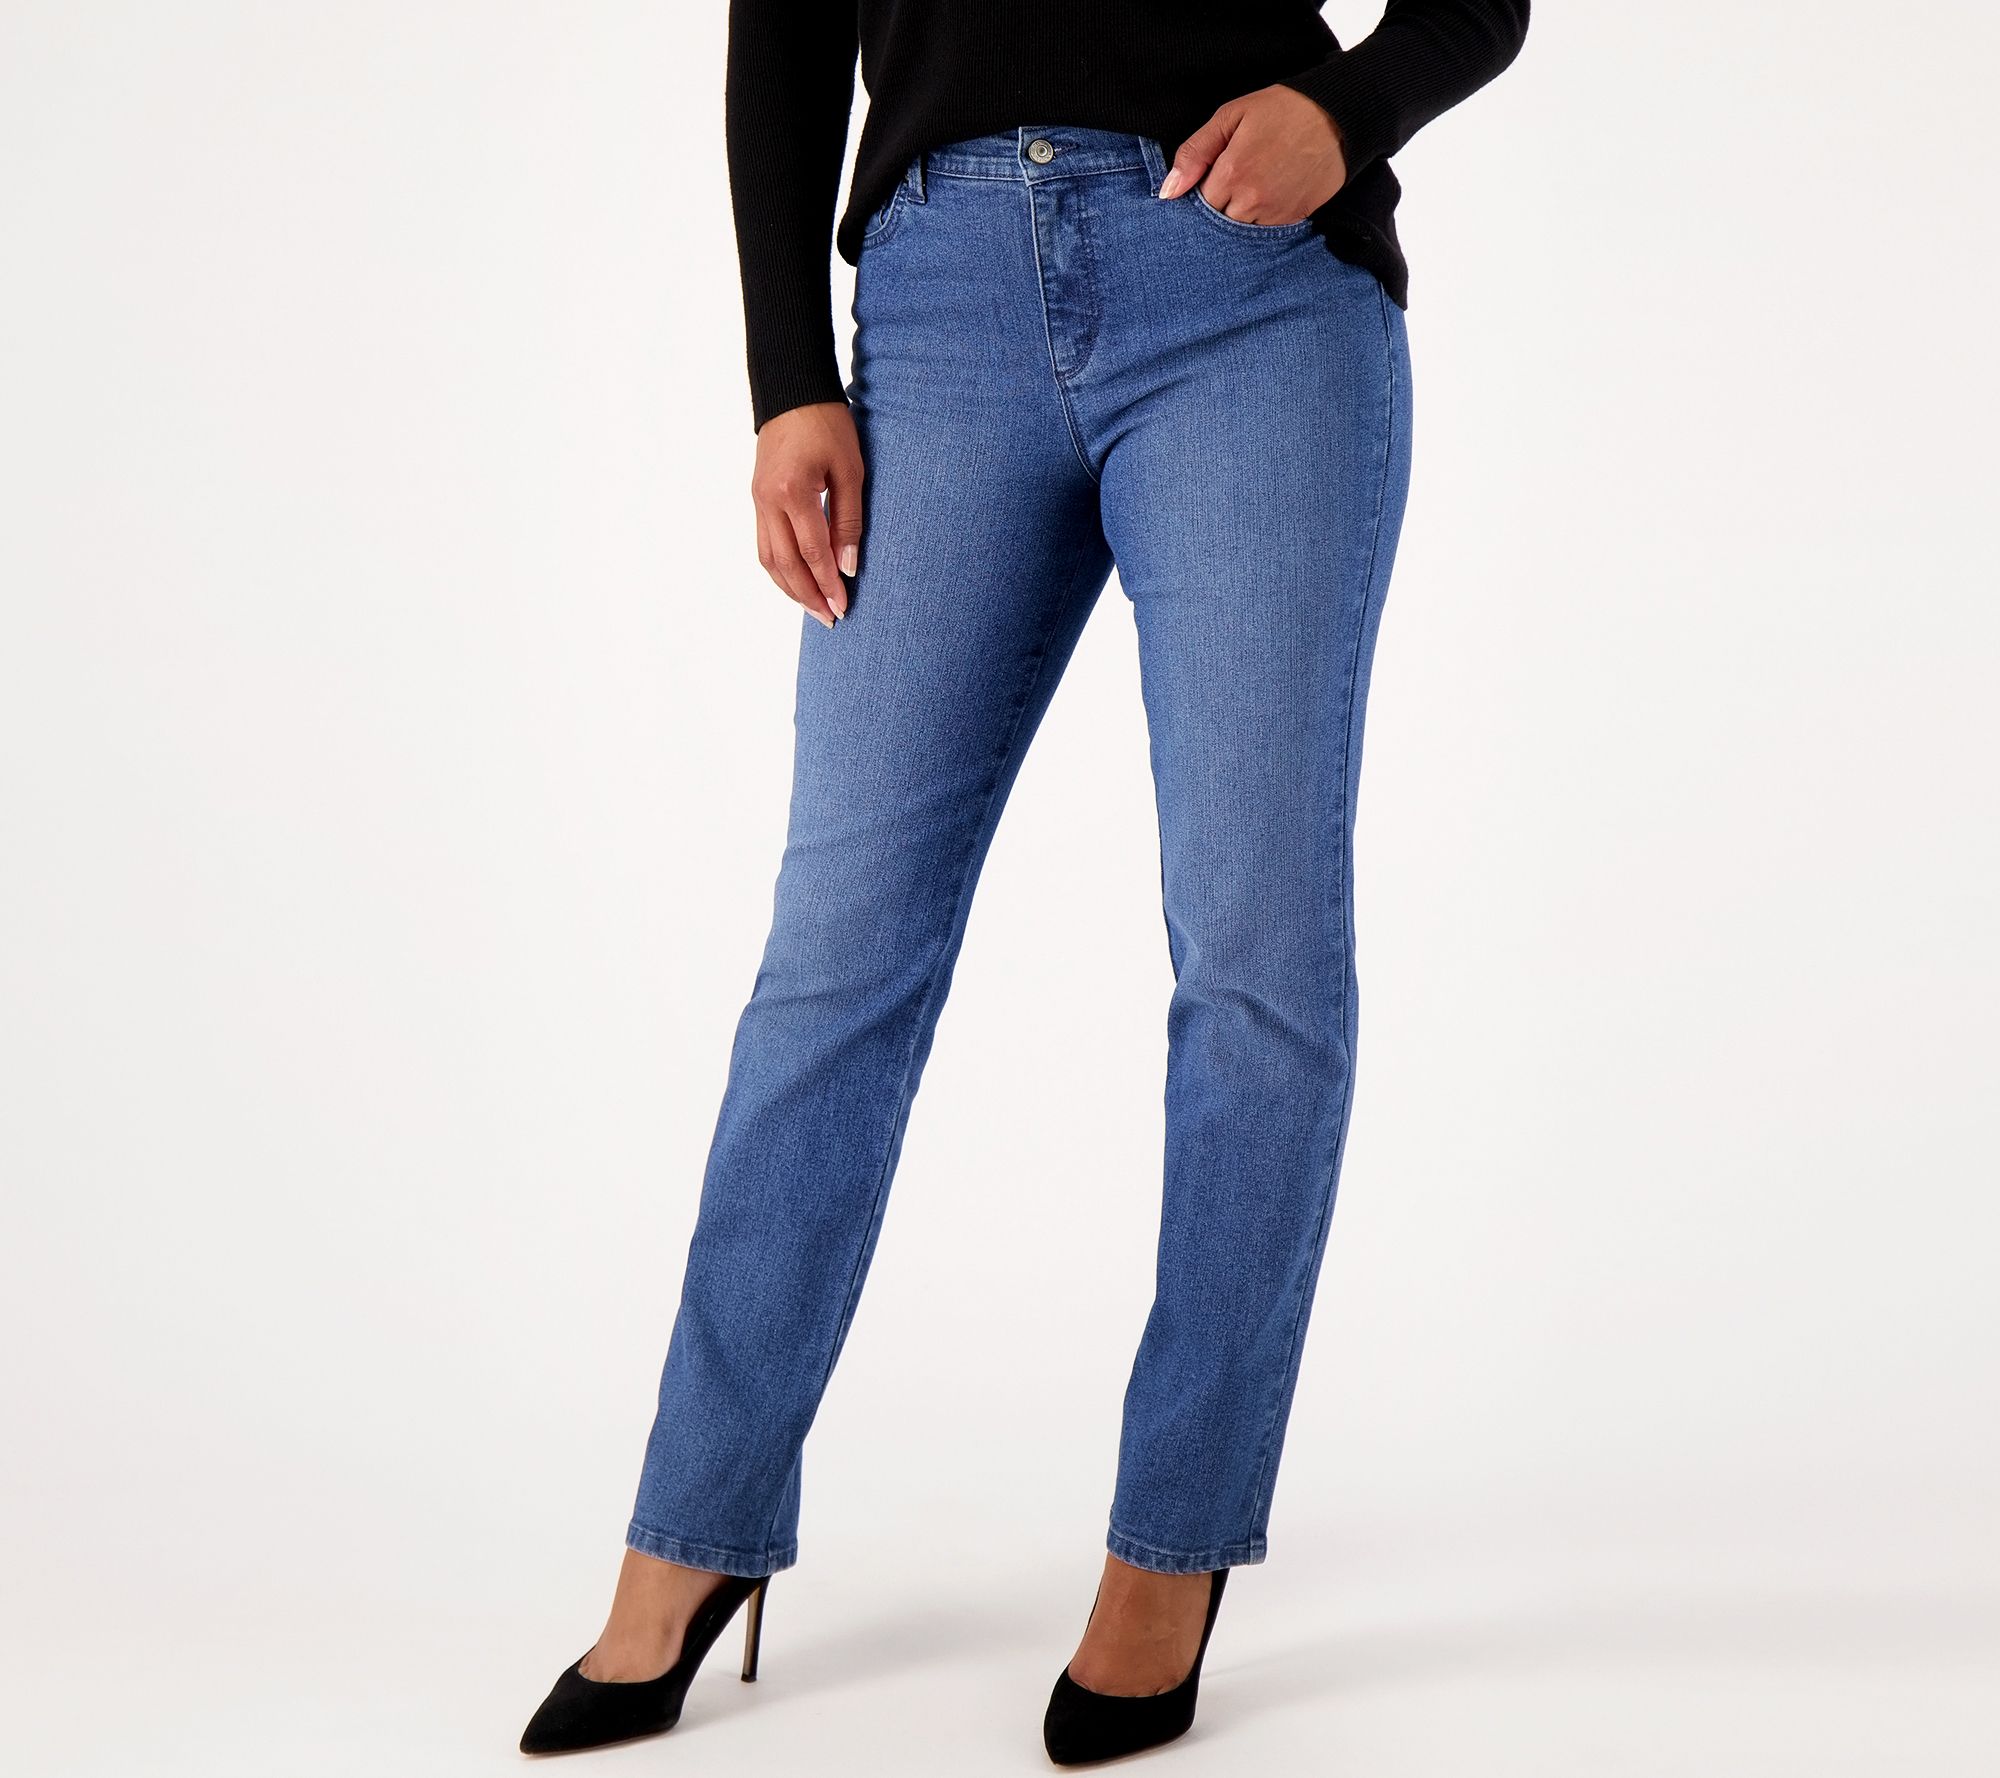 gloria vanderbilt amanda jeans plus size 20, fire sale off 75% - rdd.edu.iq